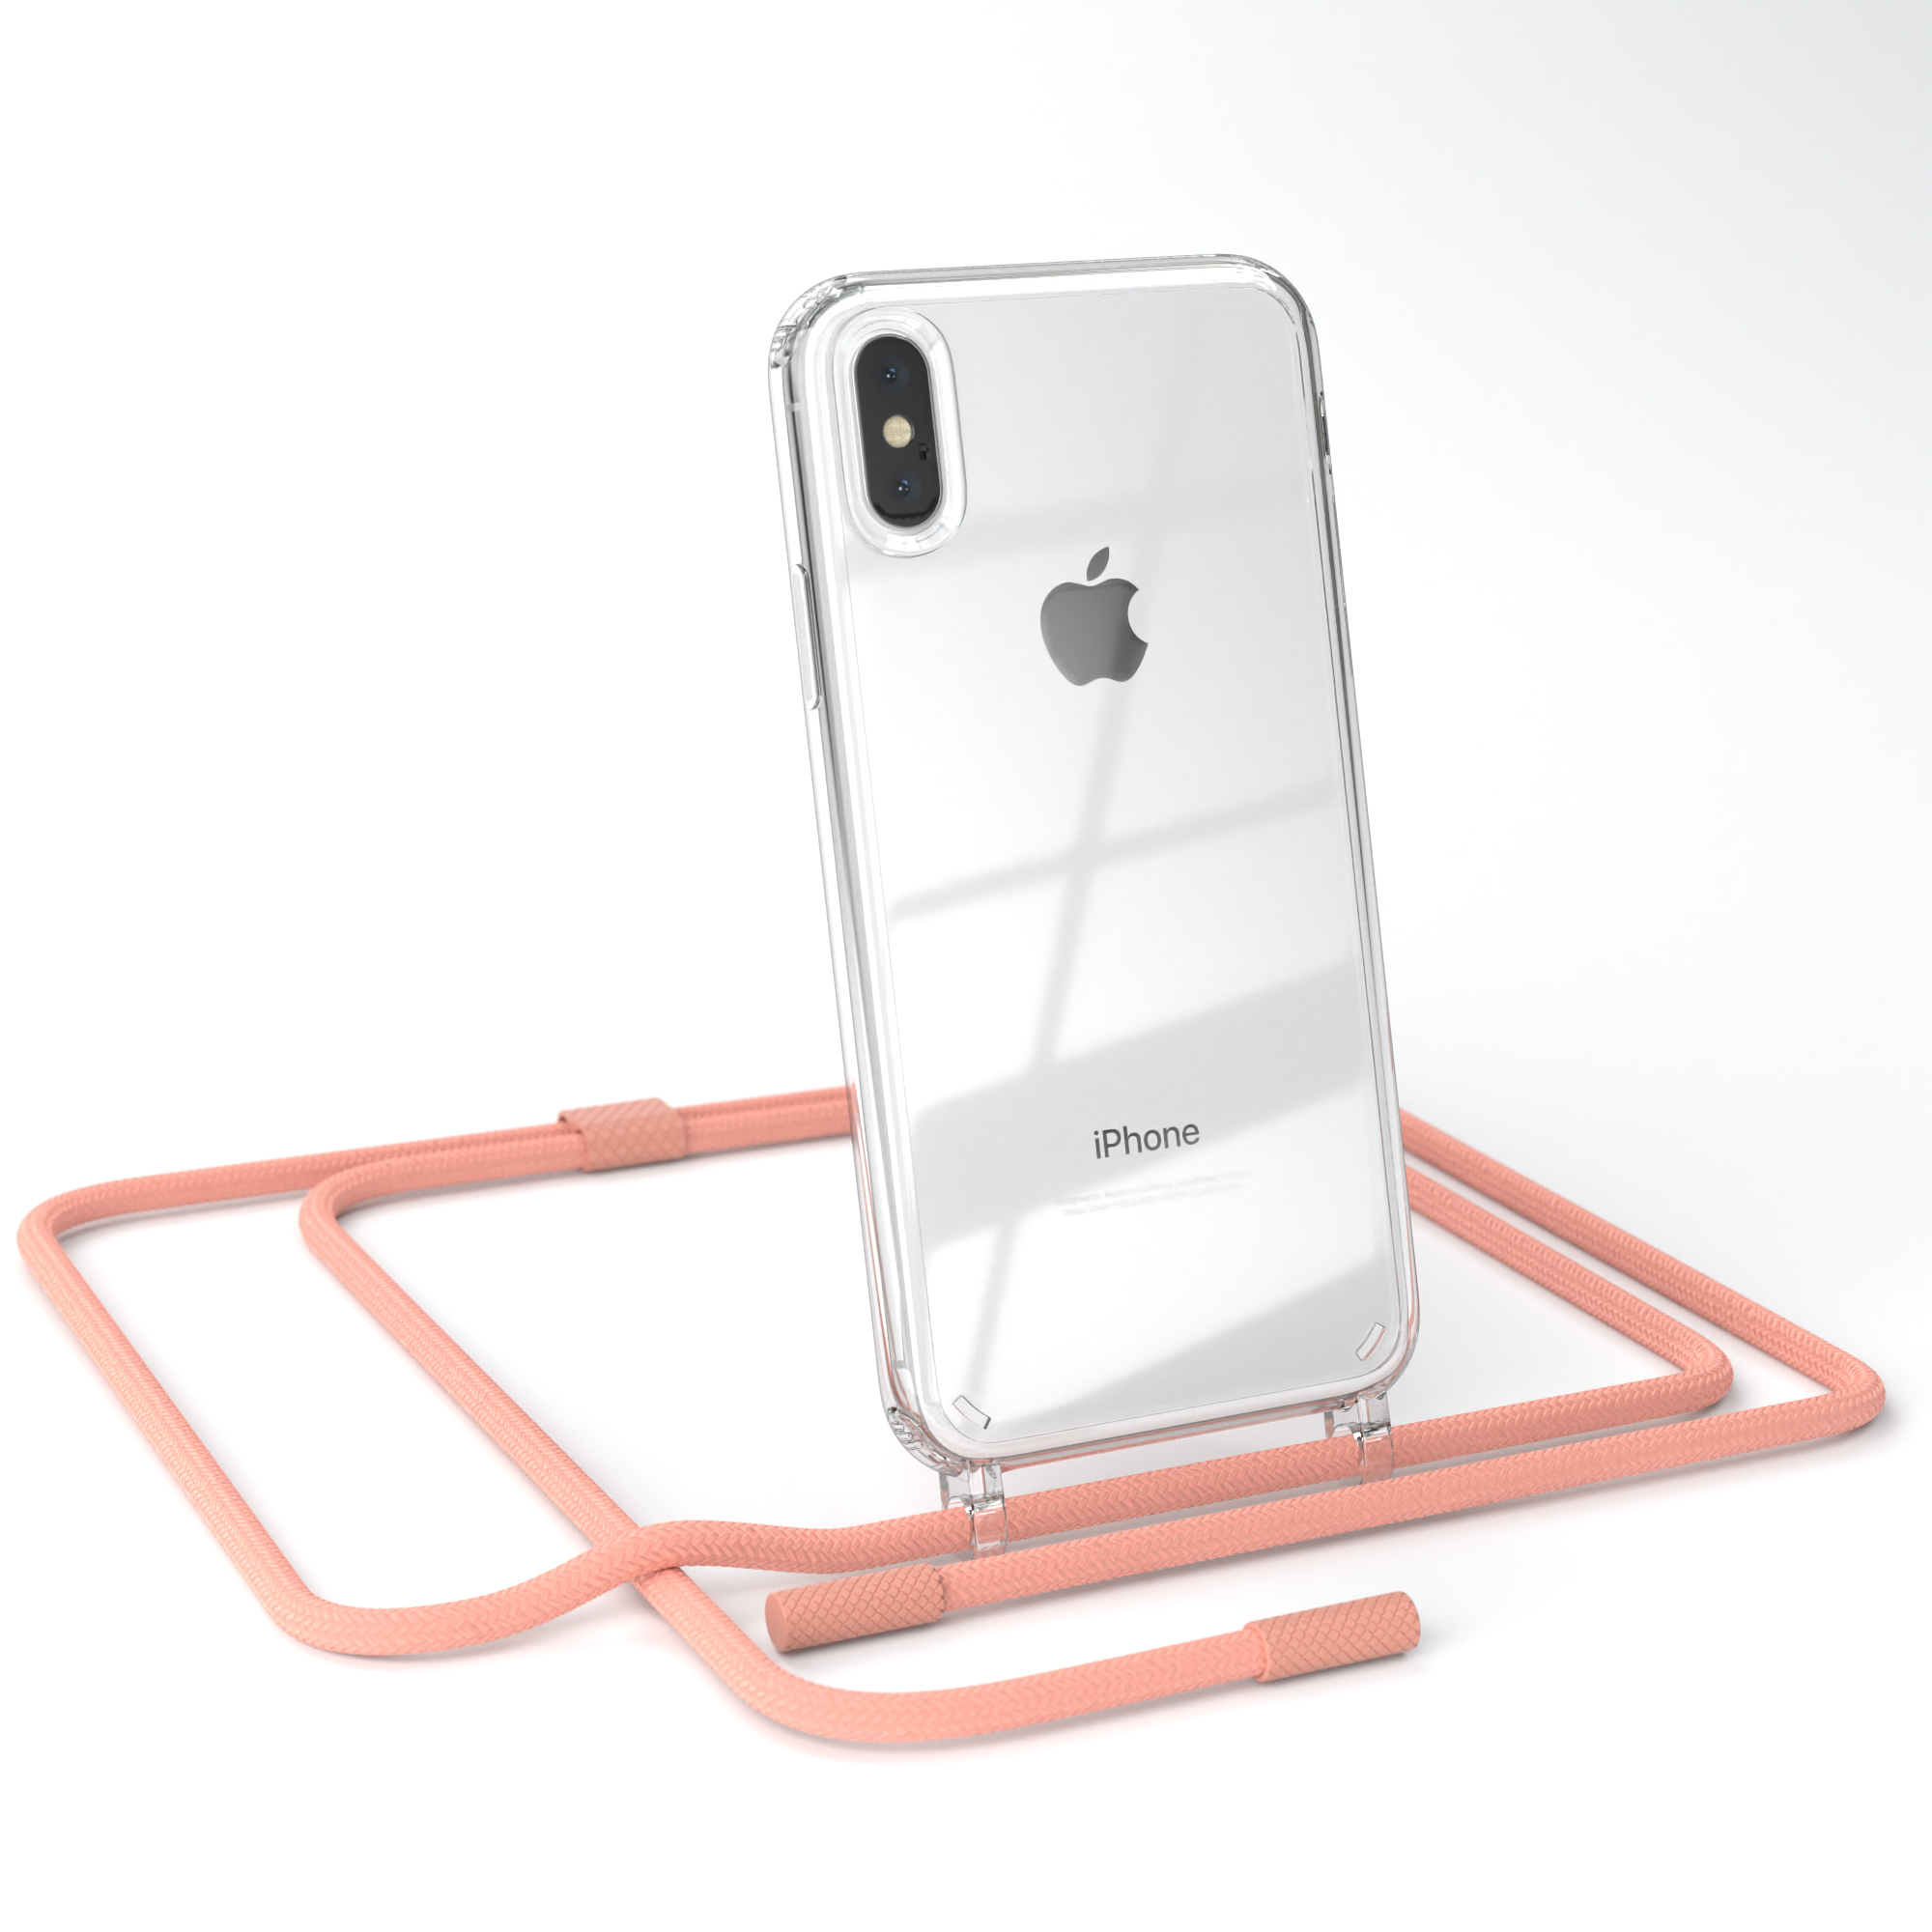 EAZY CASE Transparente Handyhülle mit Altrosa Apple, unifarbend, Max, XS runder Umhängetasche, iPhone Coral Kette 